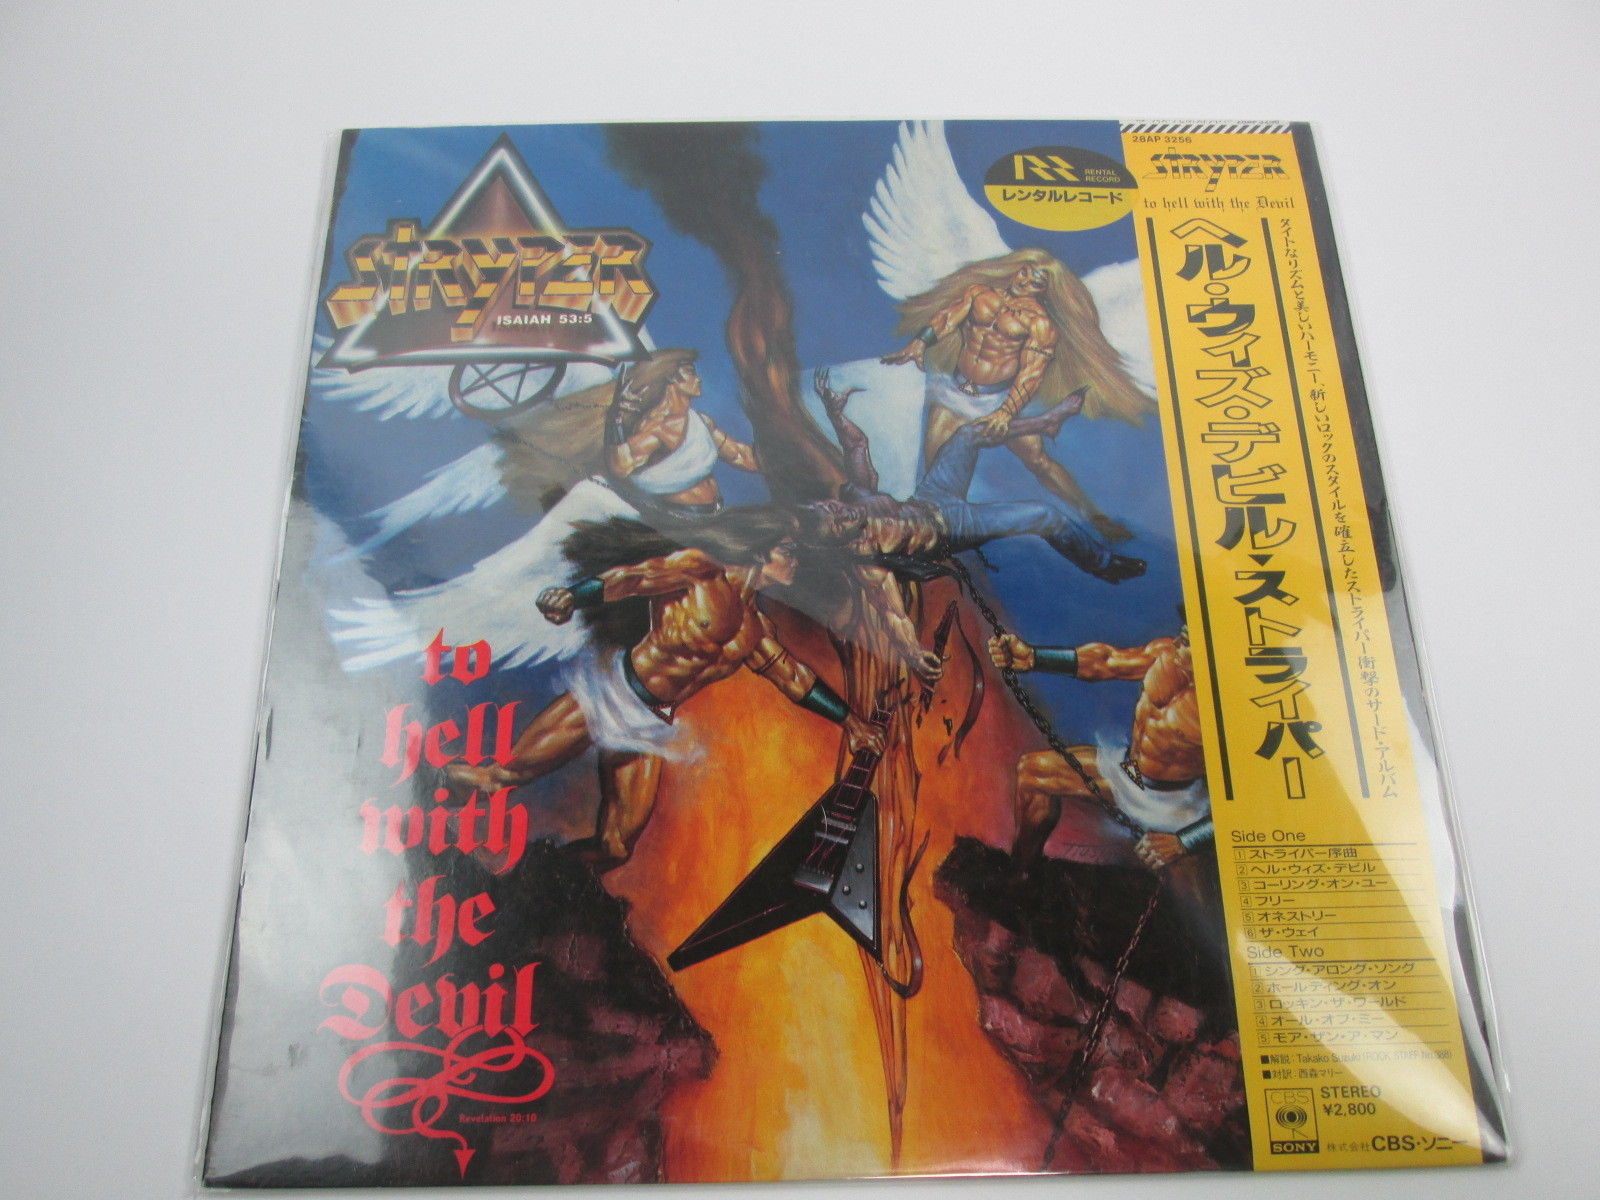 popsike.com - STRYPER TO HELL WITH THE DEVIL 28AP 3256 With OBI Japan VINYL  LP - auction details